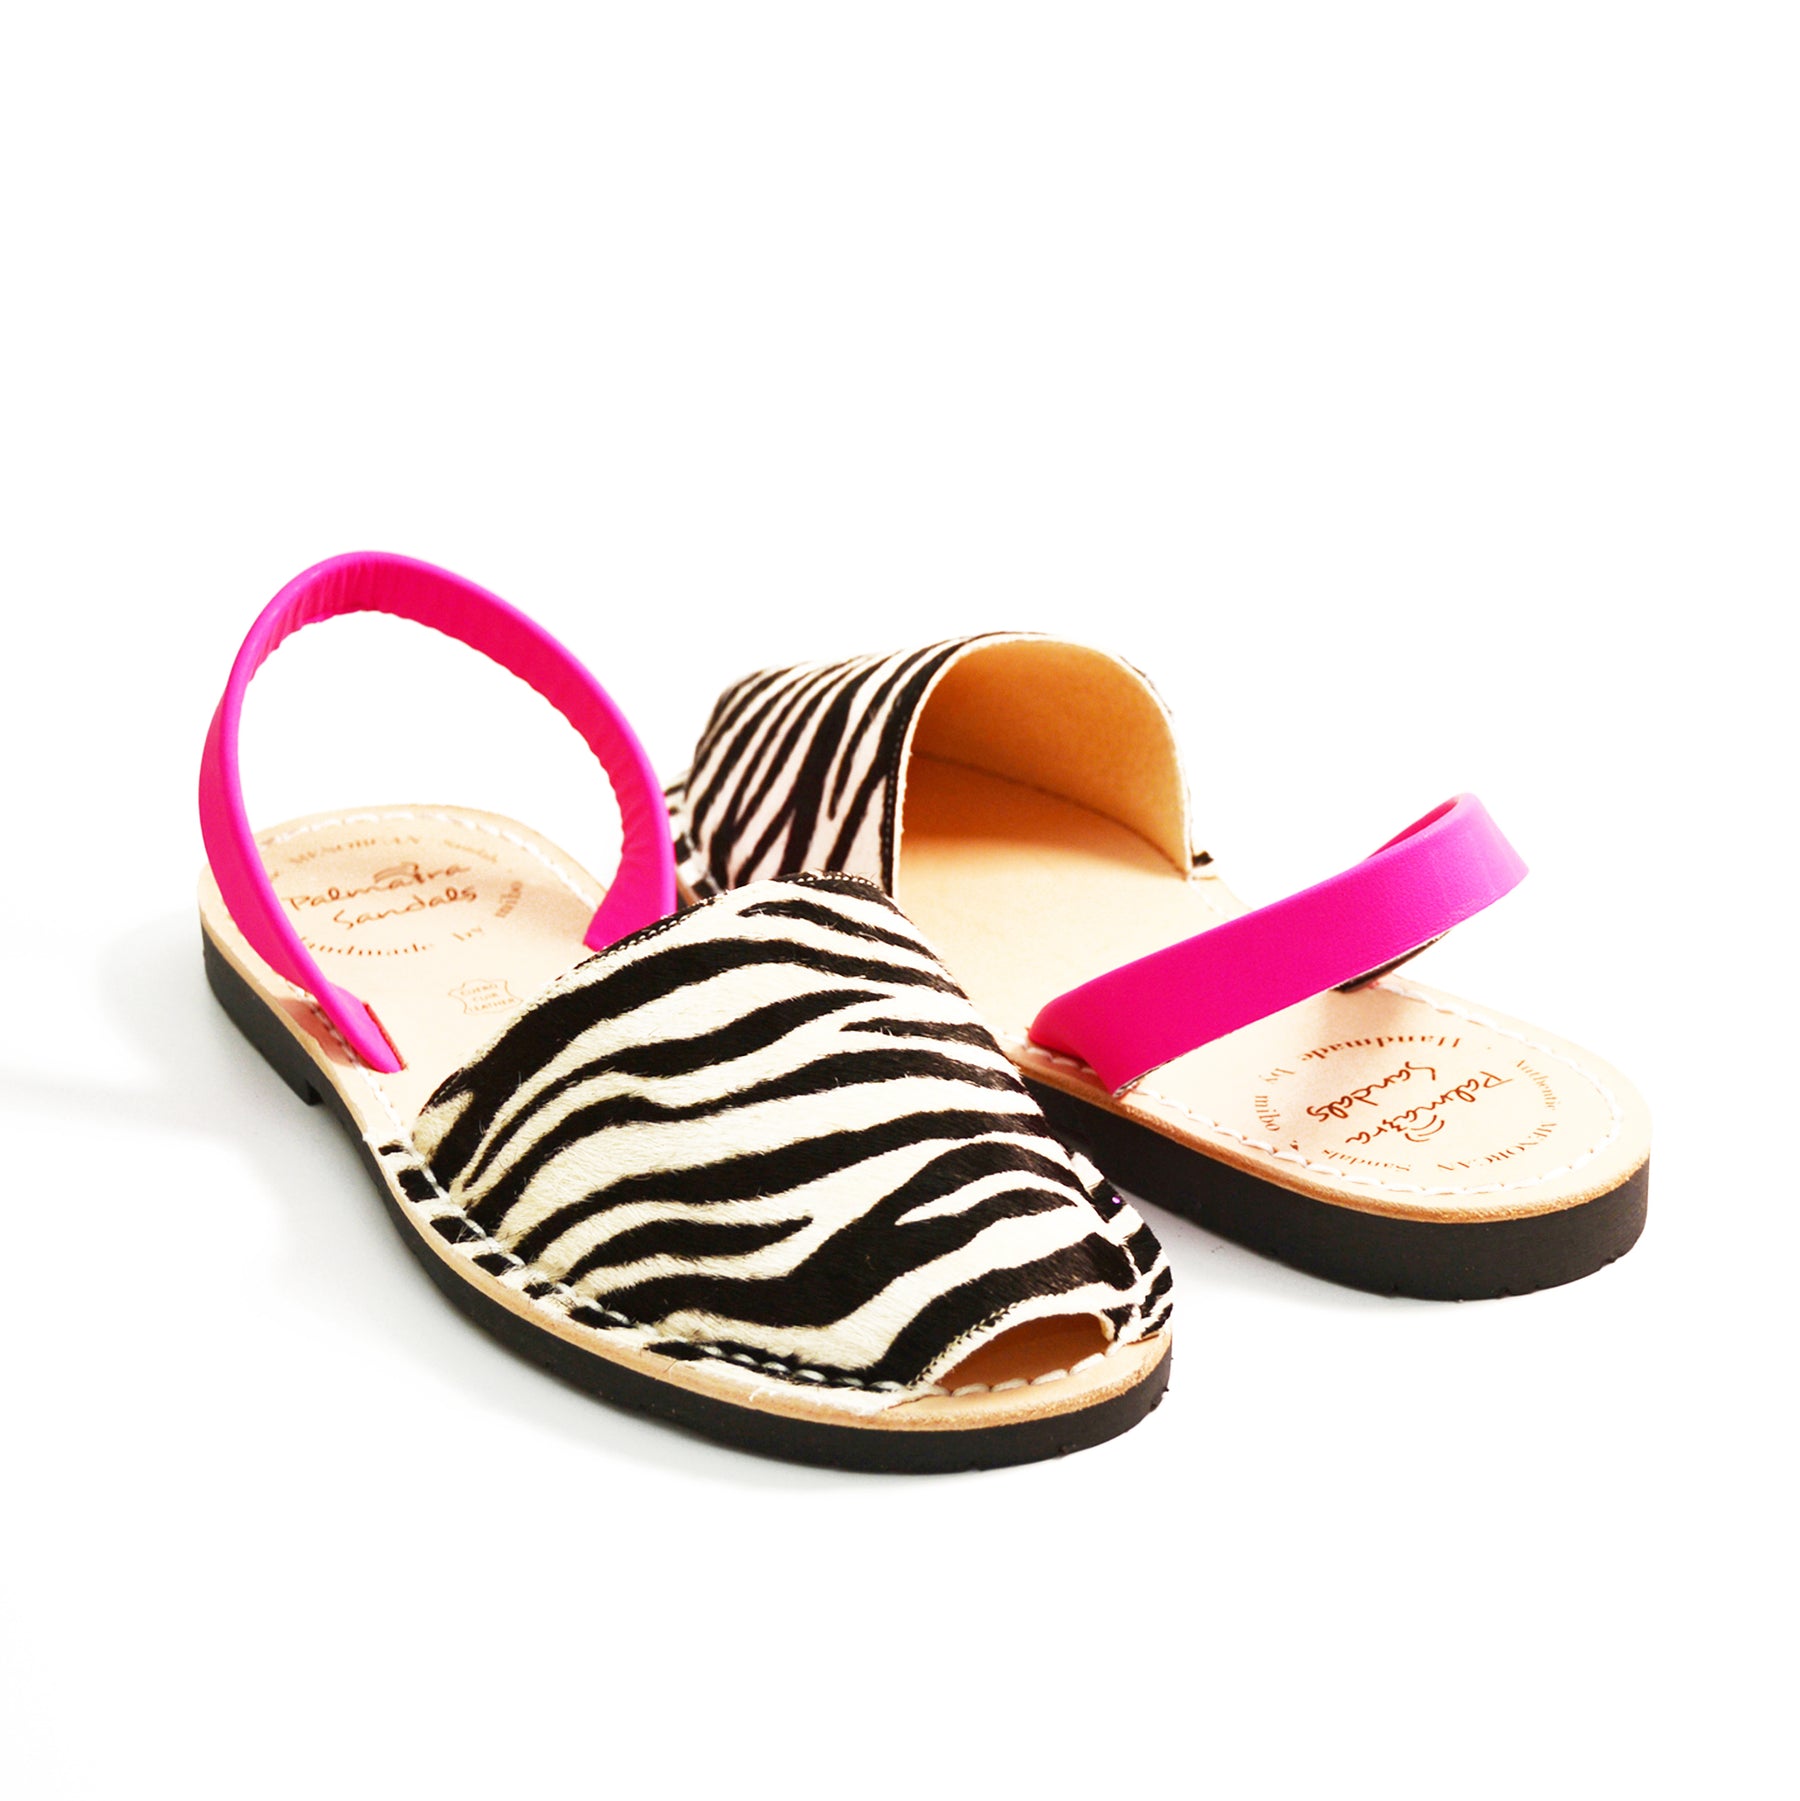 zebra print and neon pink menorcan spanish avarcas sandals